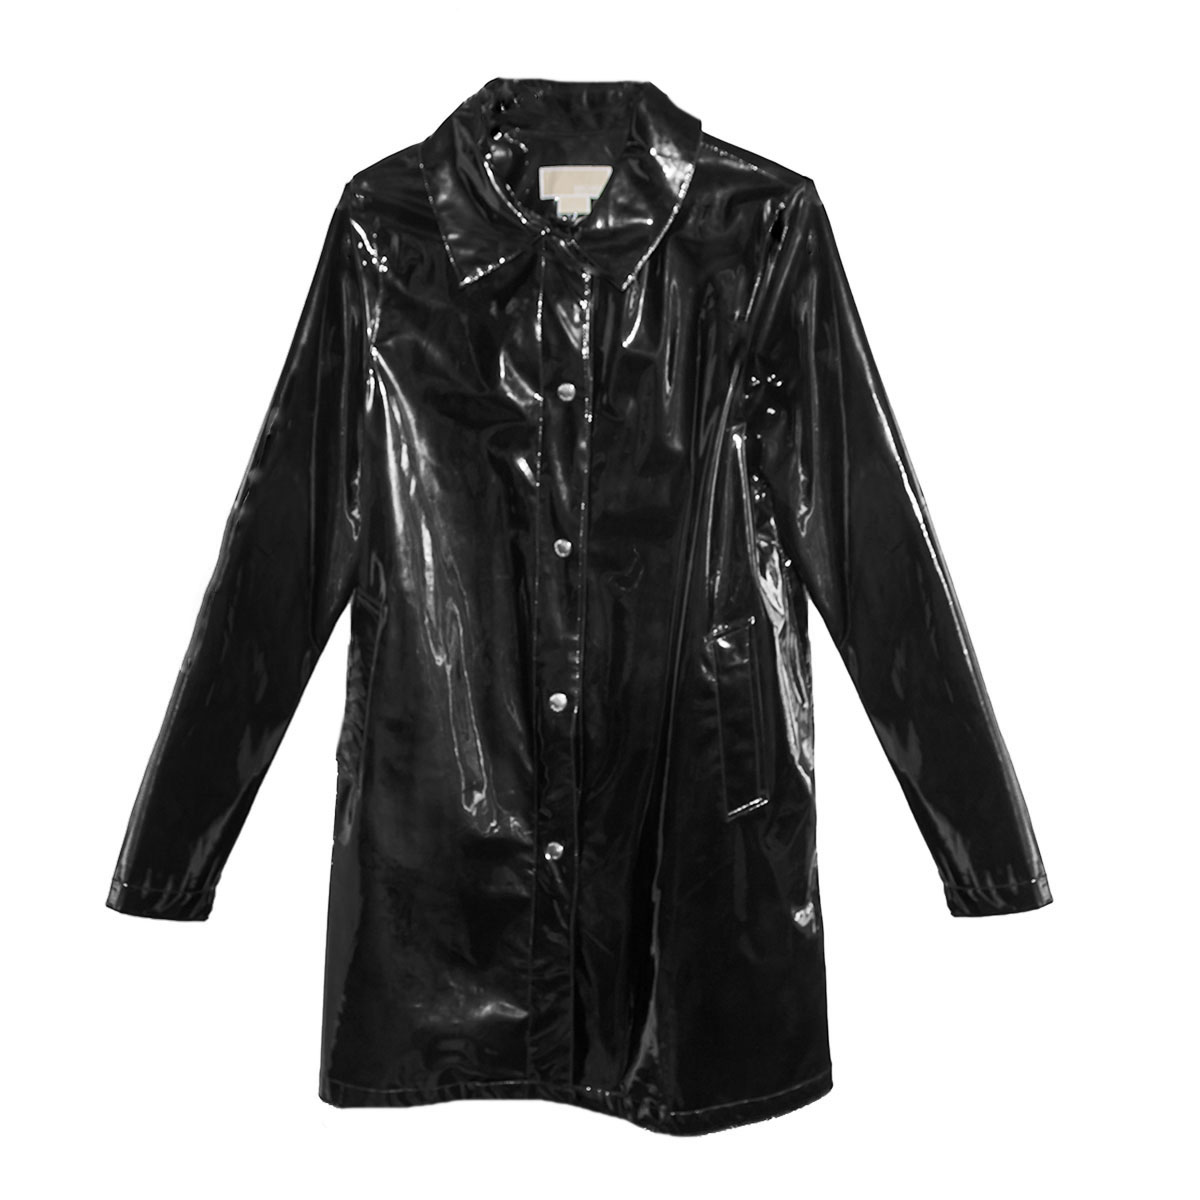 Michael Kors Black trench style Raincoat